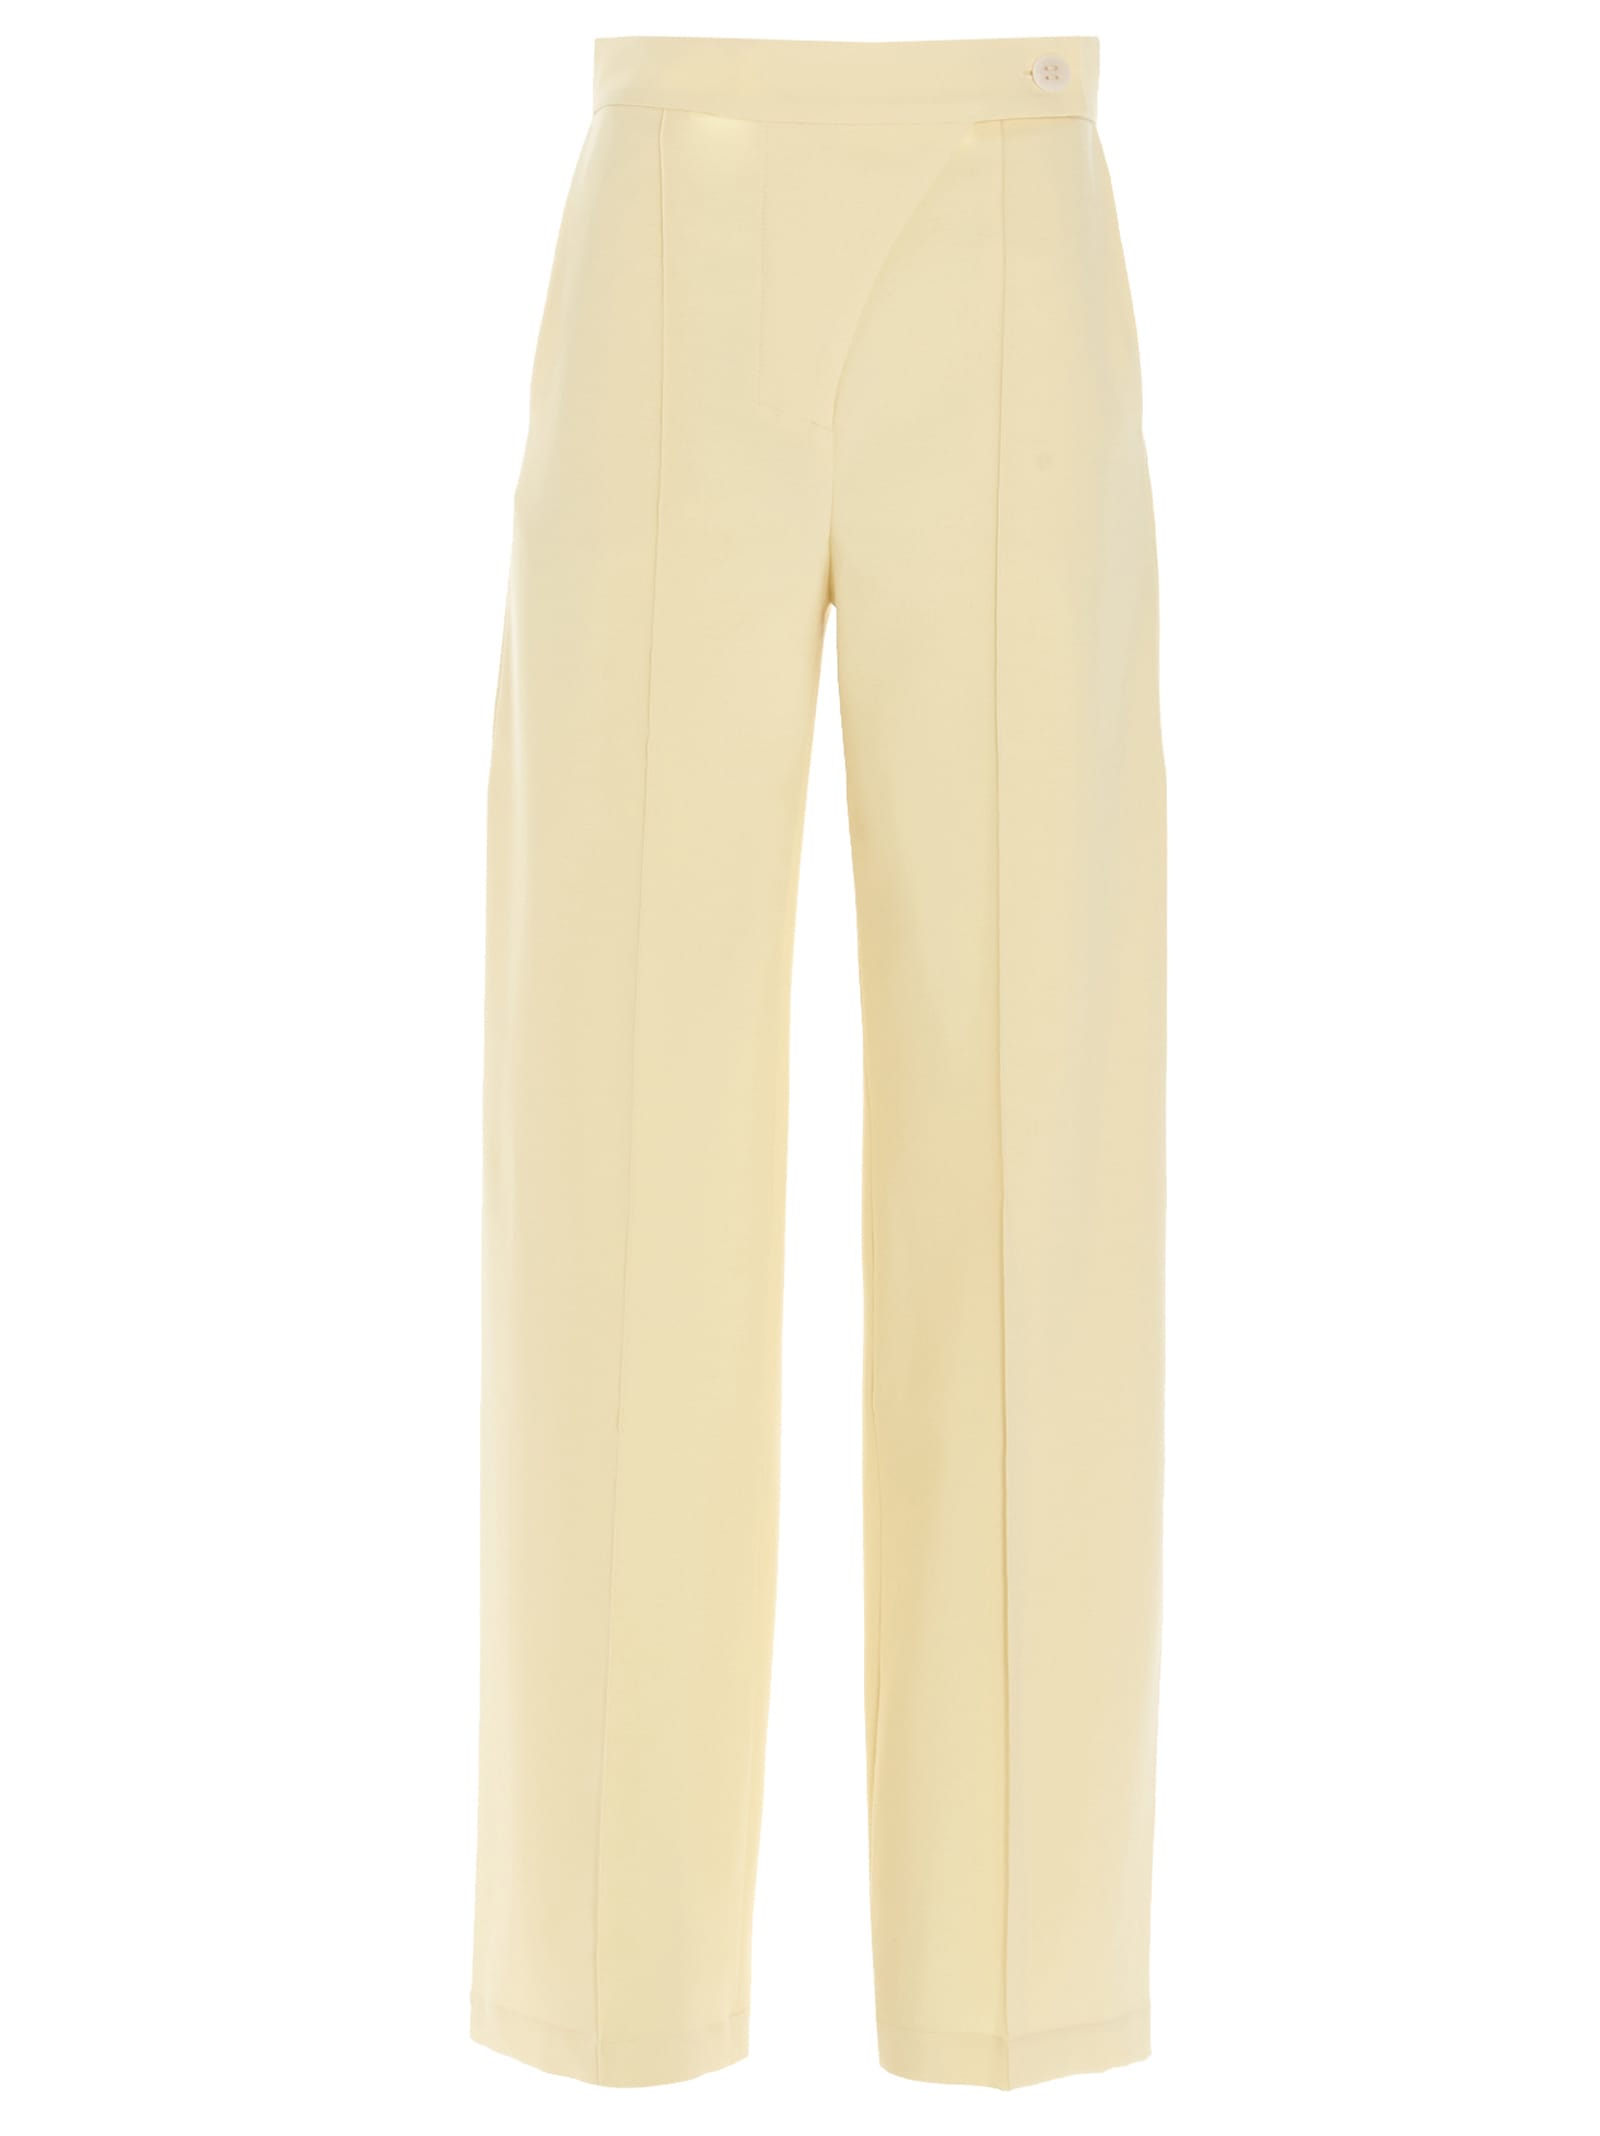 AERON TRISHA trousers,P137 748